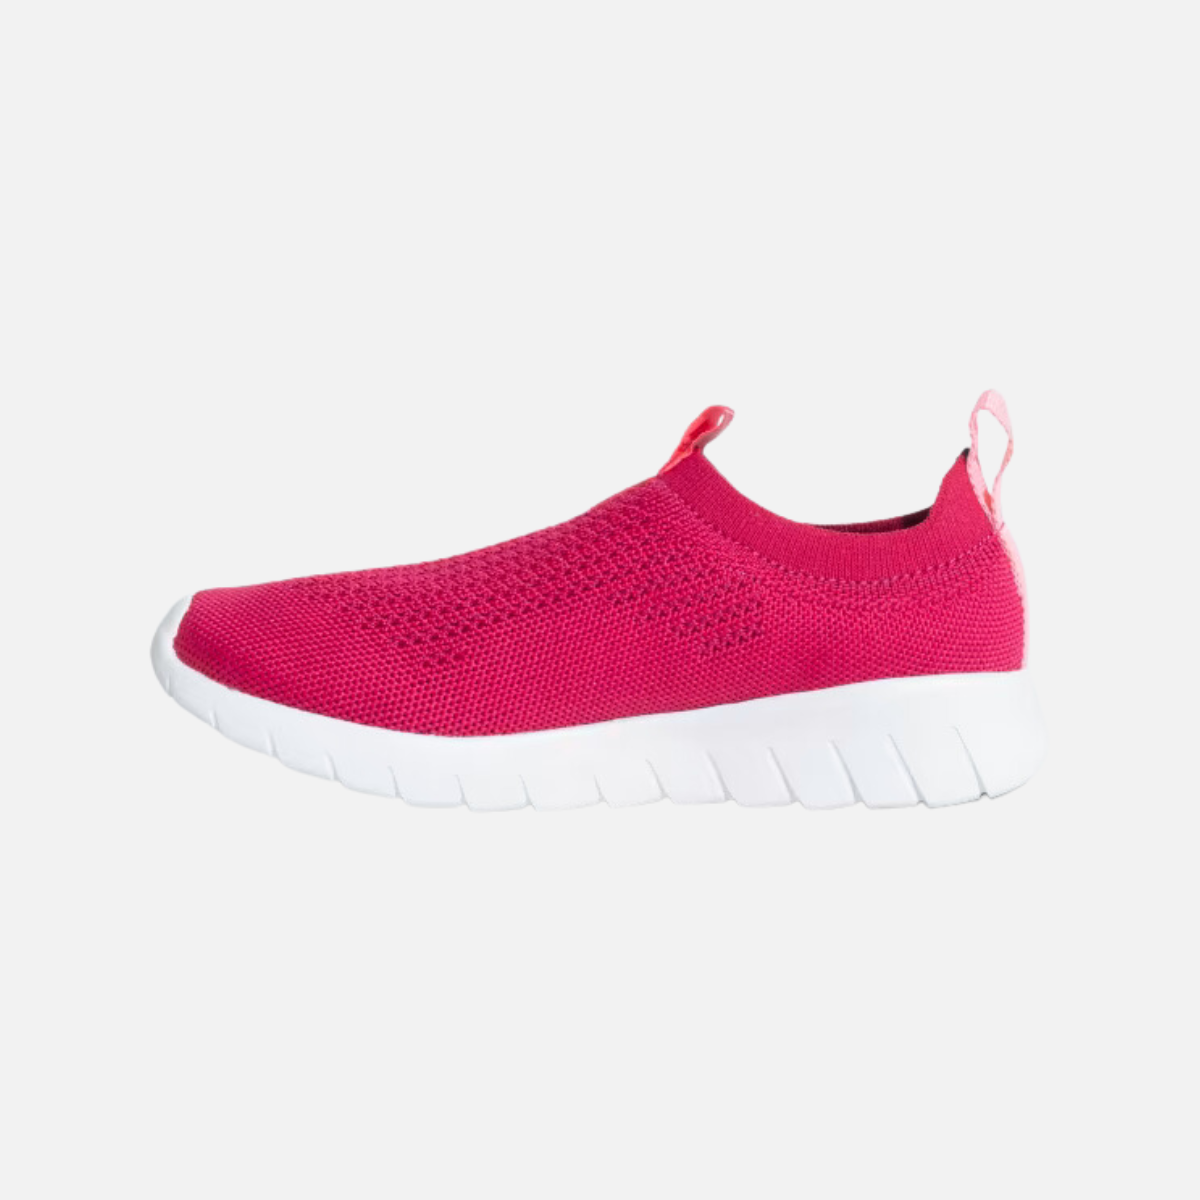 Adidas Perchwalk 1.0 Kids Unisex Shoes (4-7YEAR) -Lucid Fuchsia/Beam Pink